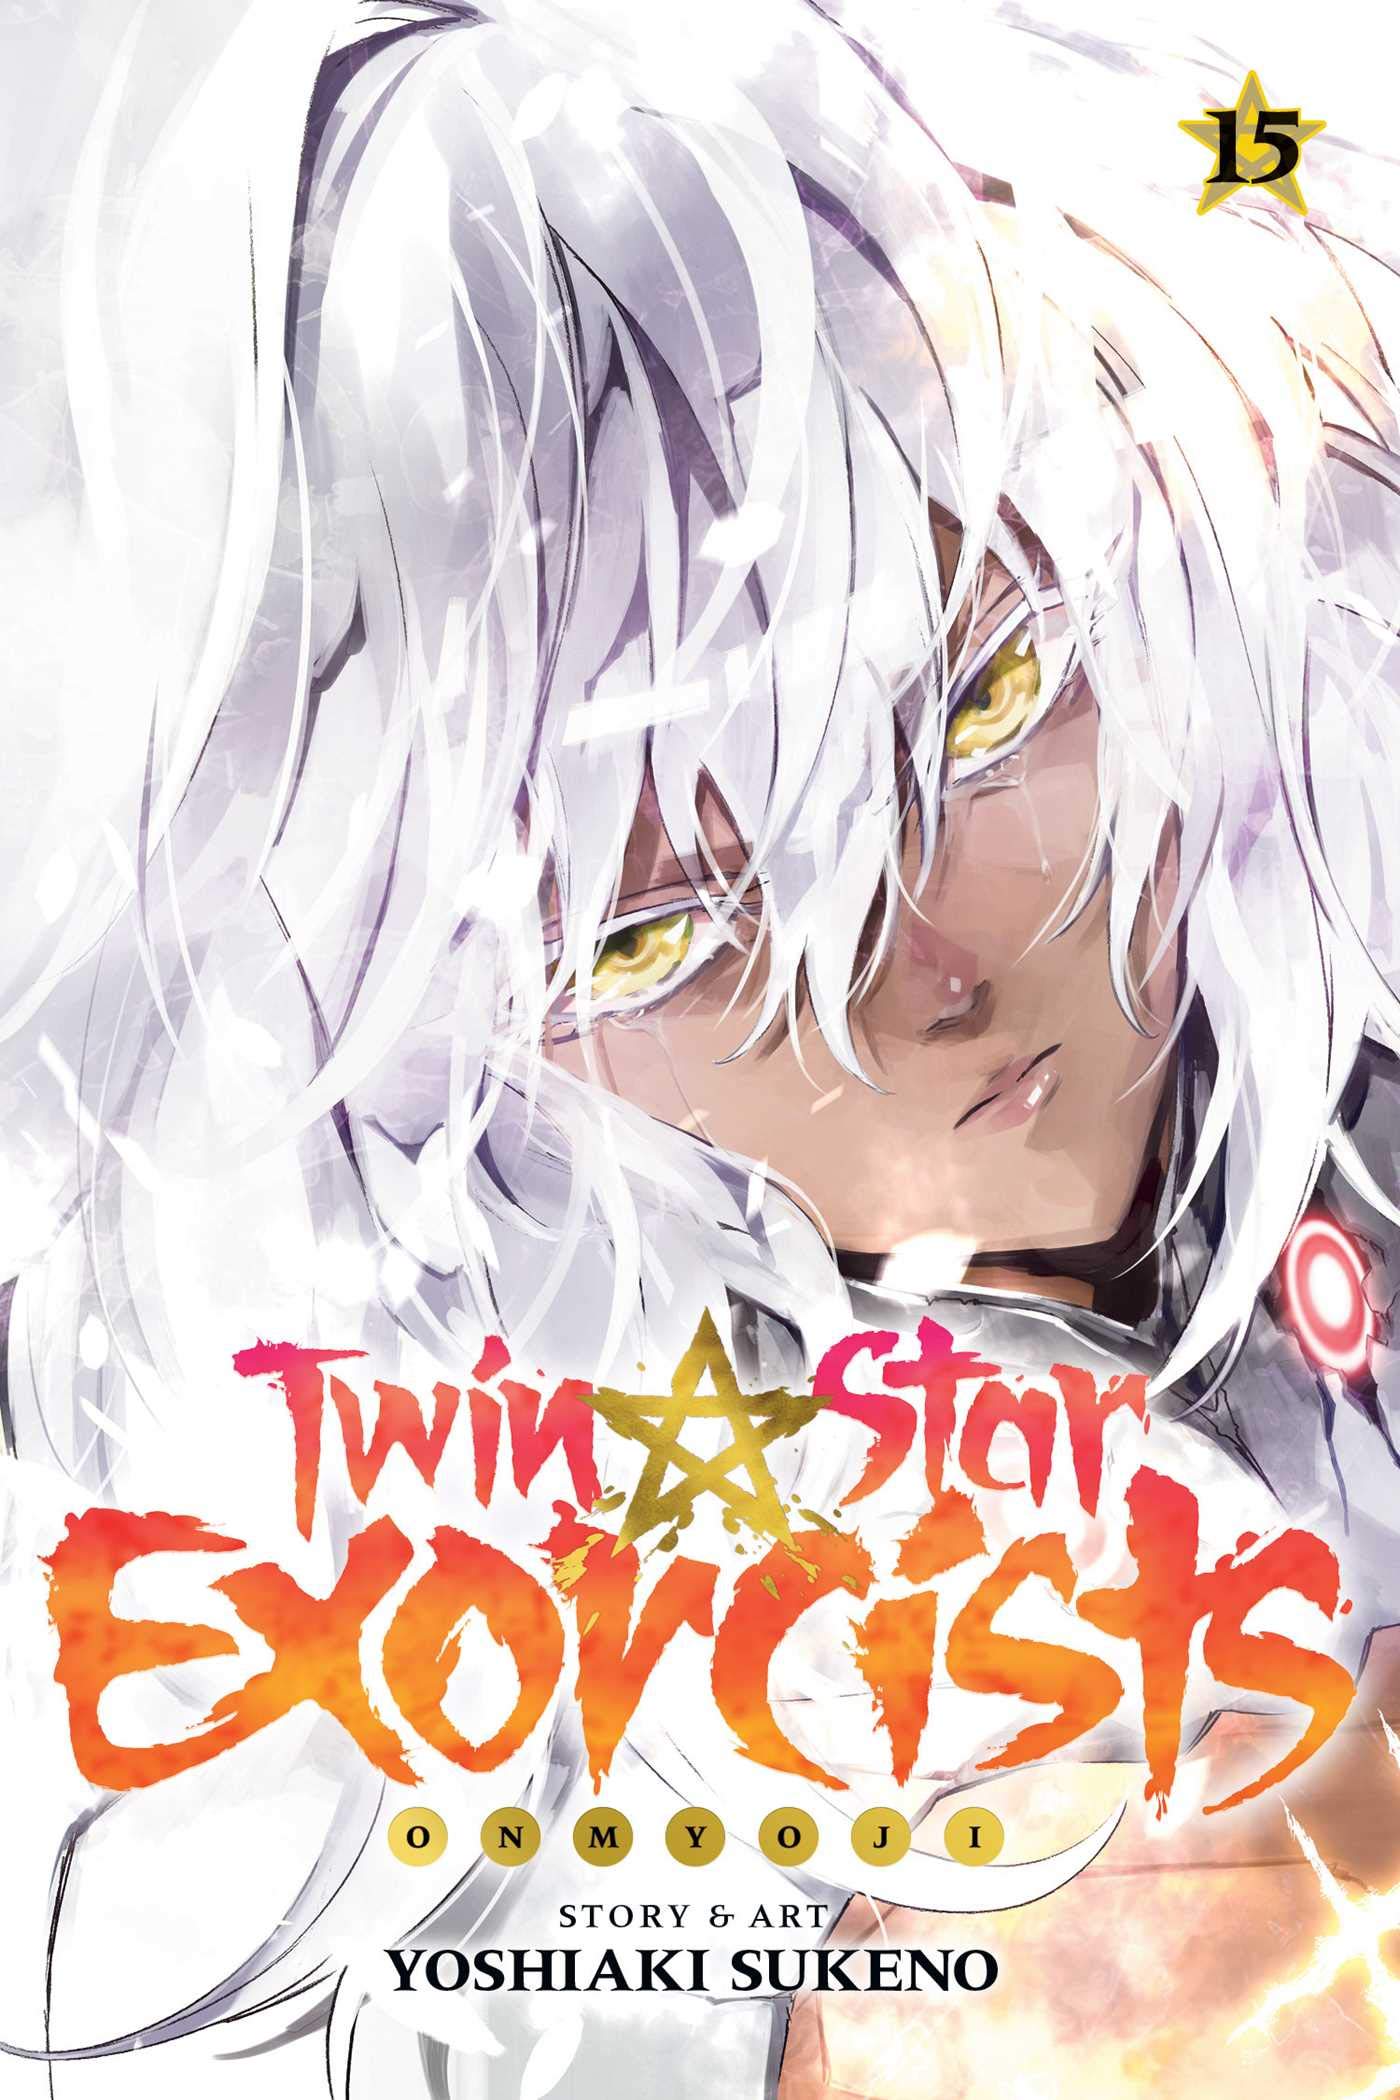 Twin Star Exorcists: Onmyoji - Volume 15 | Yoshiaki Sukeno